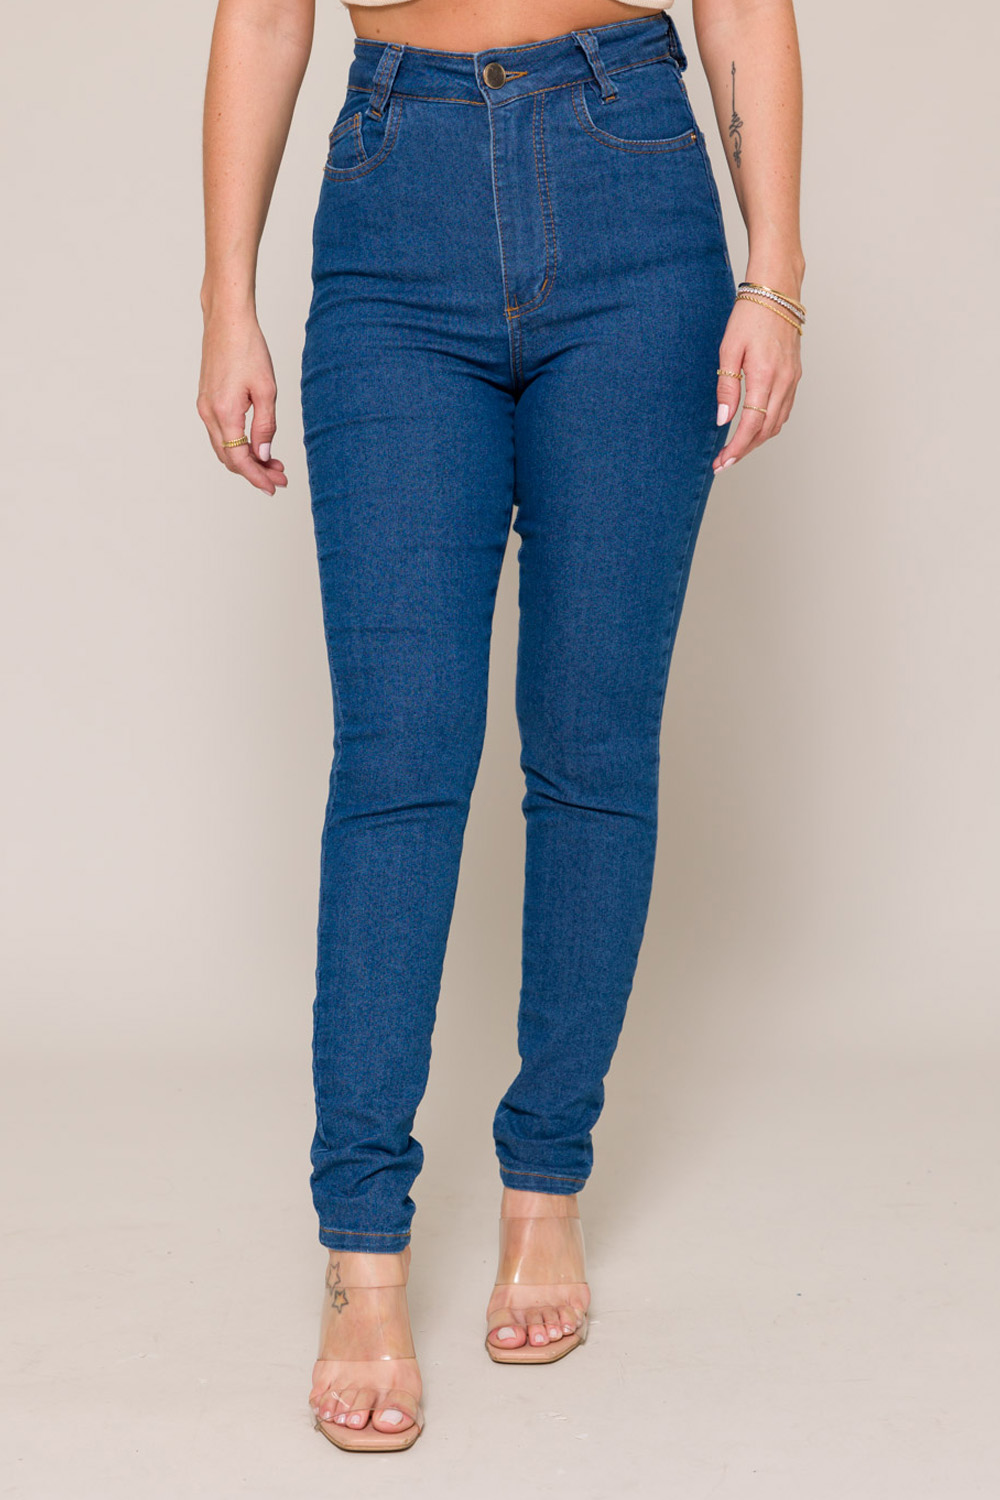 Calça Jeans Cropped Basic 11737 - Jeans Médio